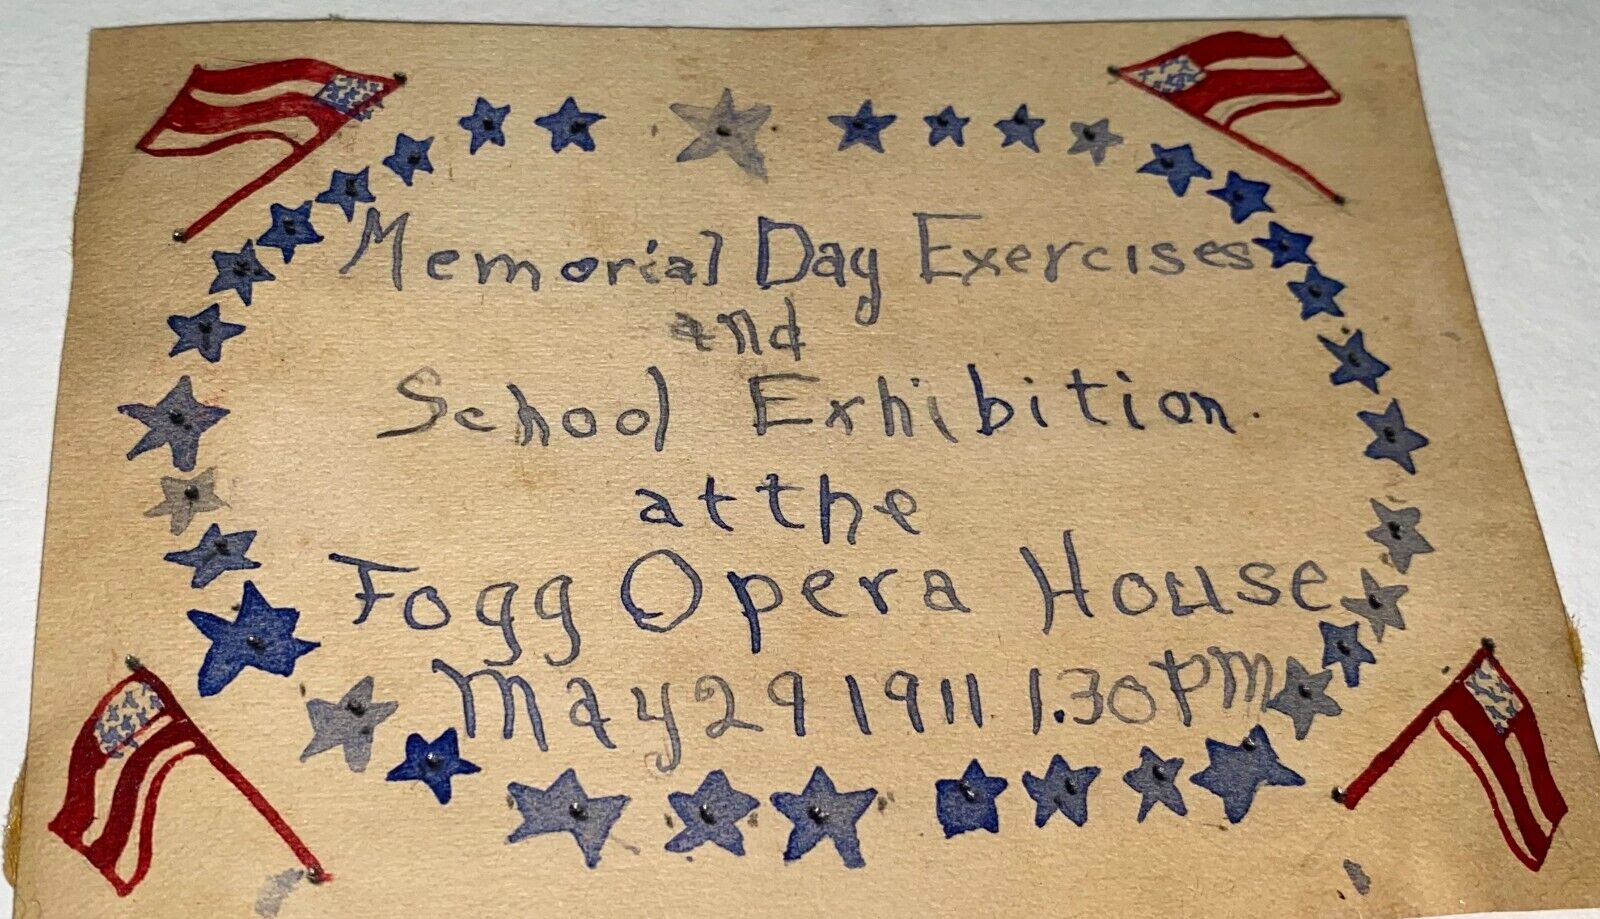 Rare Antique Patriotic Handmade Memorial Day & Exhibition Fogg Opera House 1911